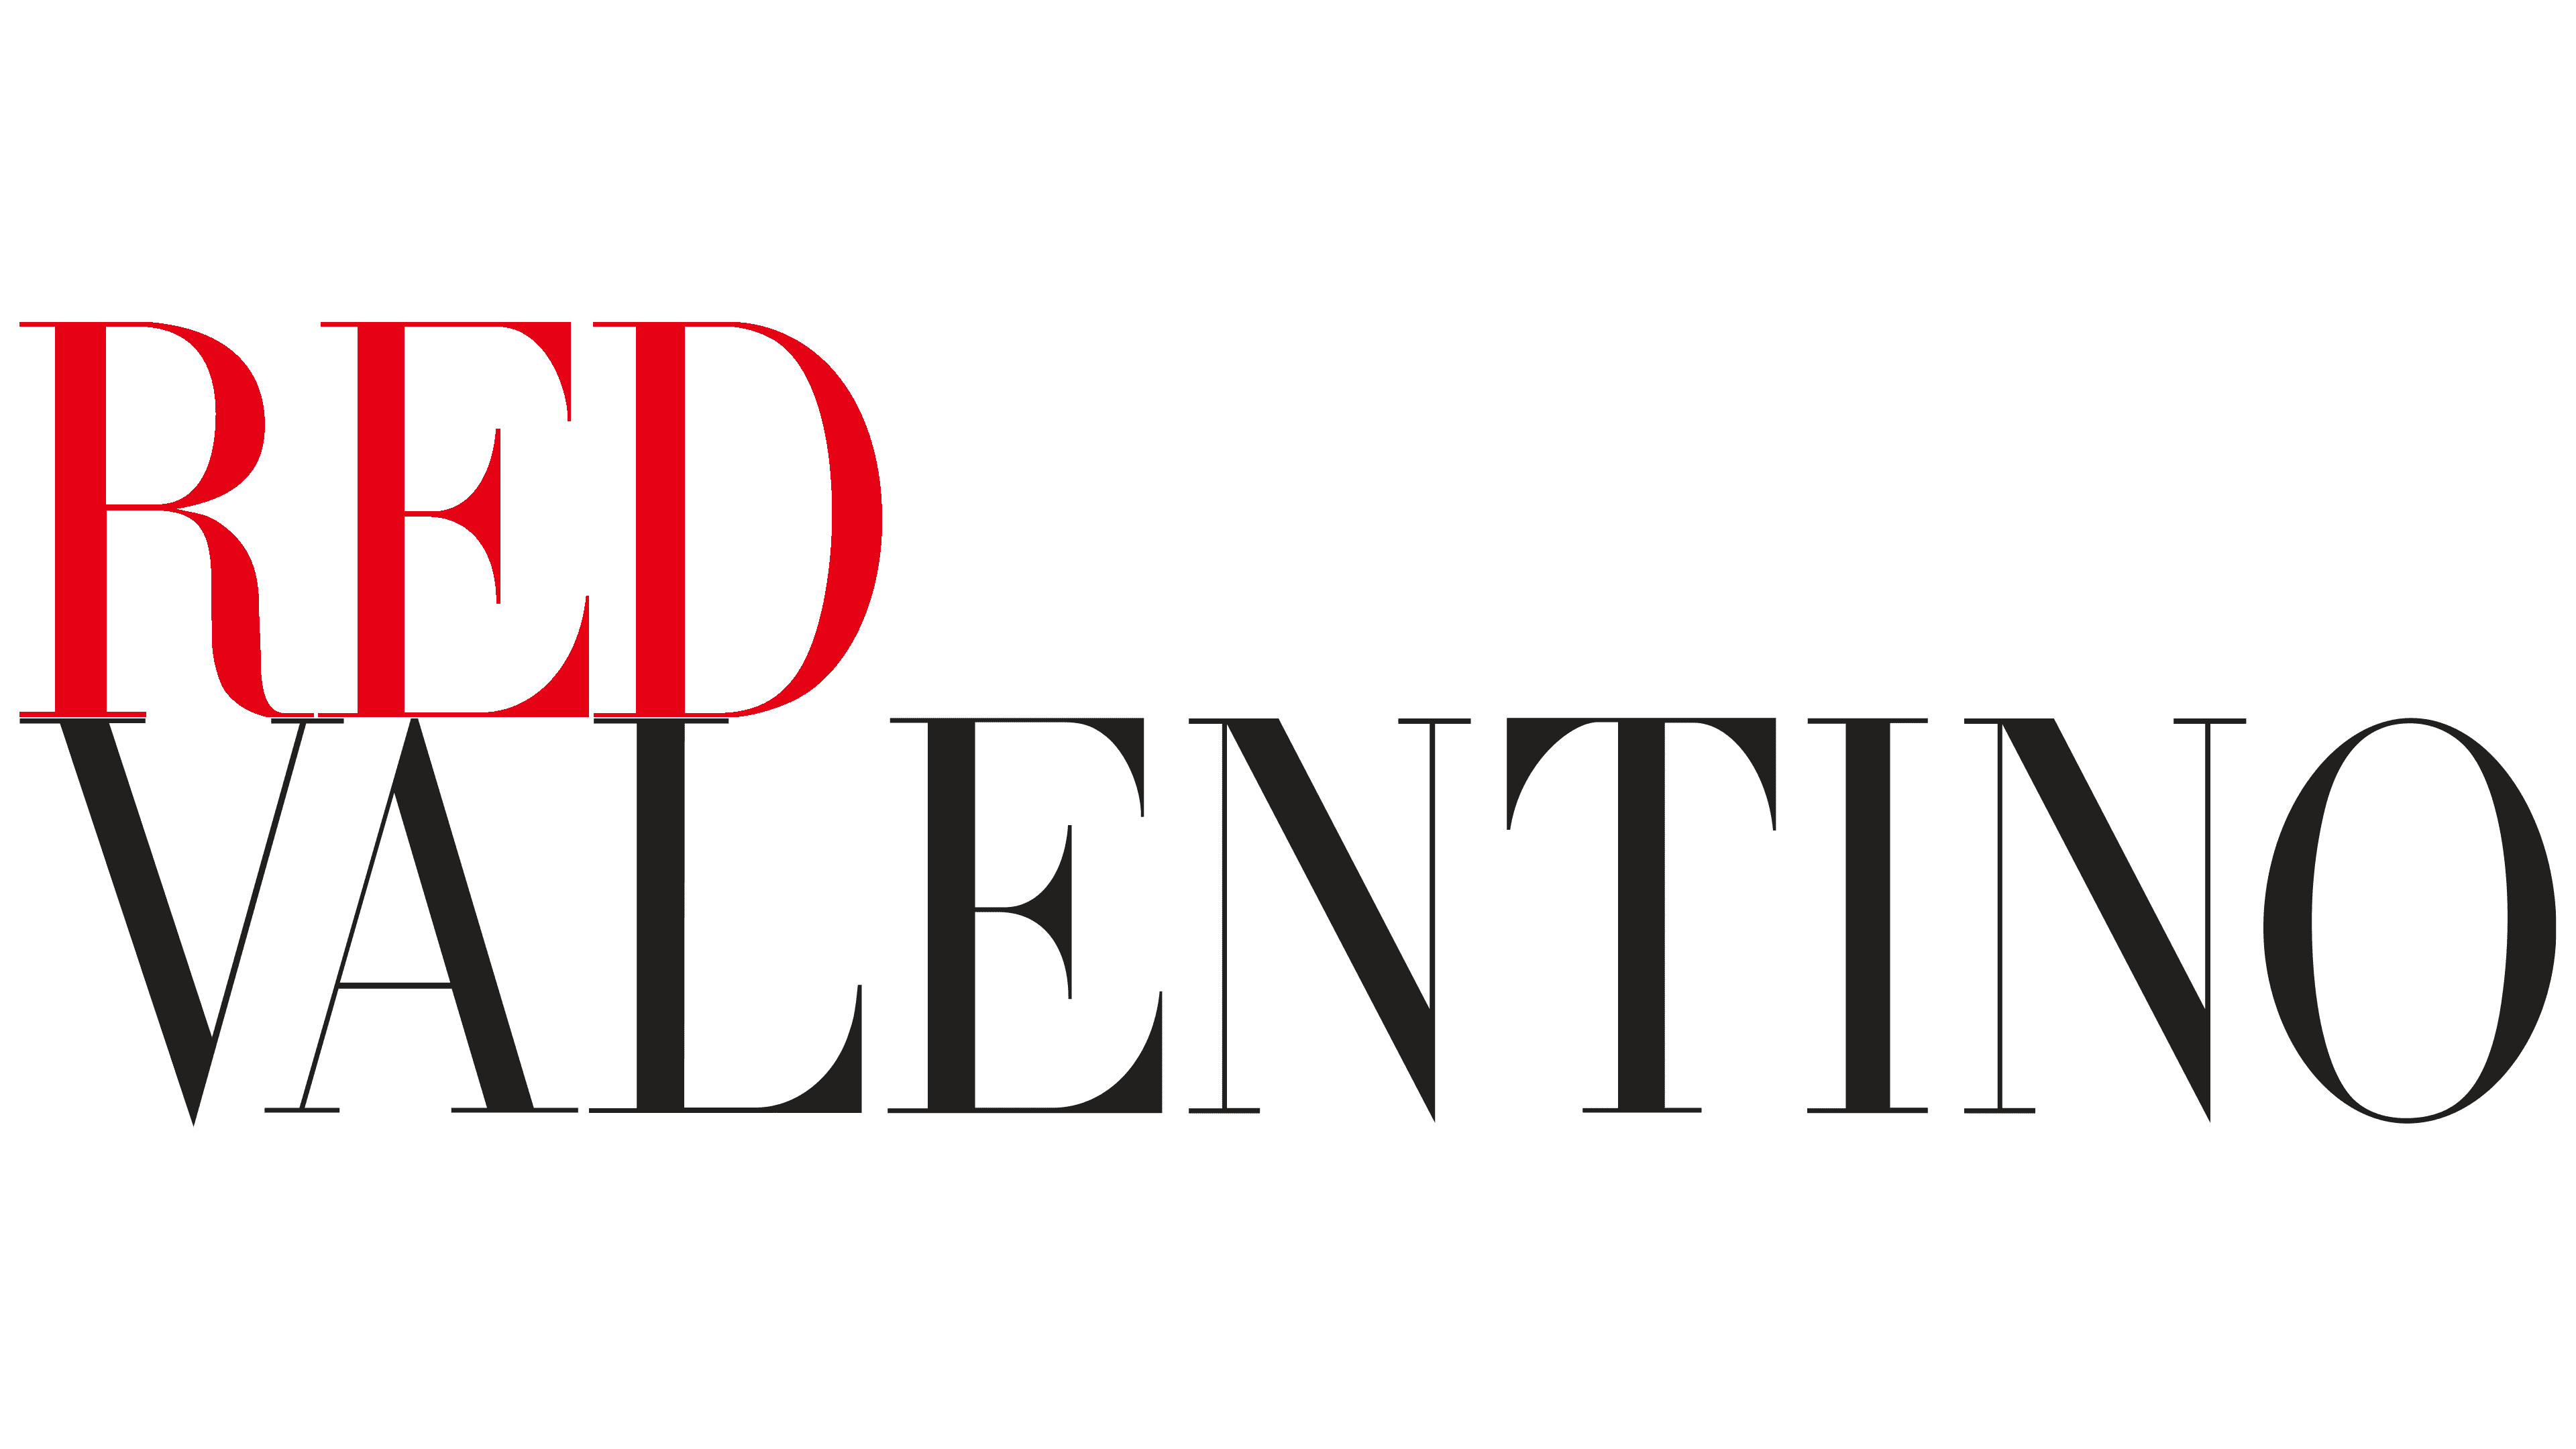 Red Valentino Logo